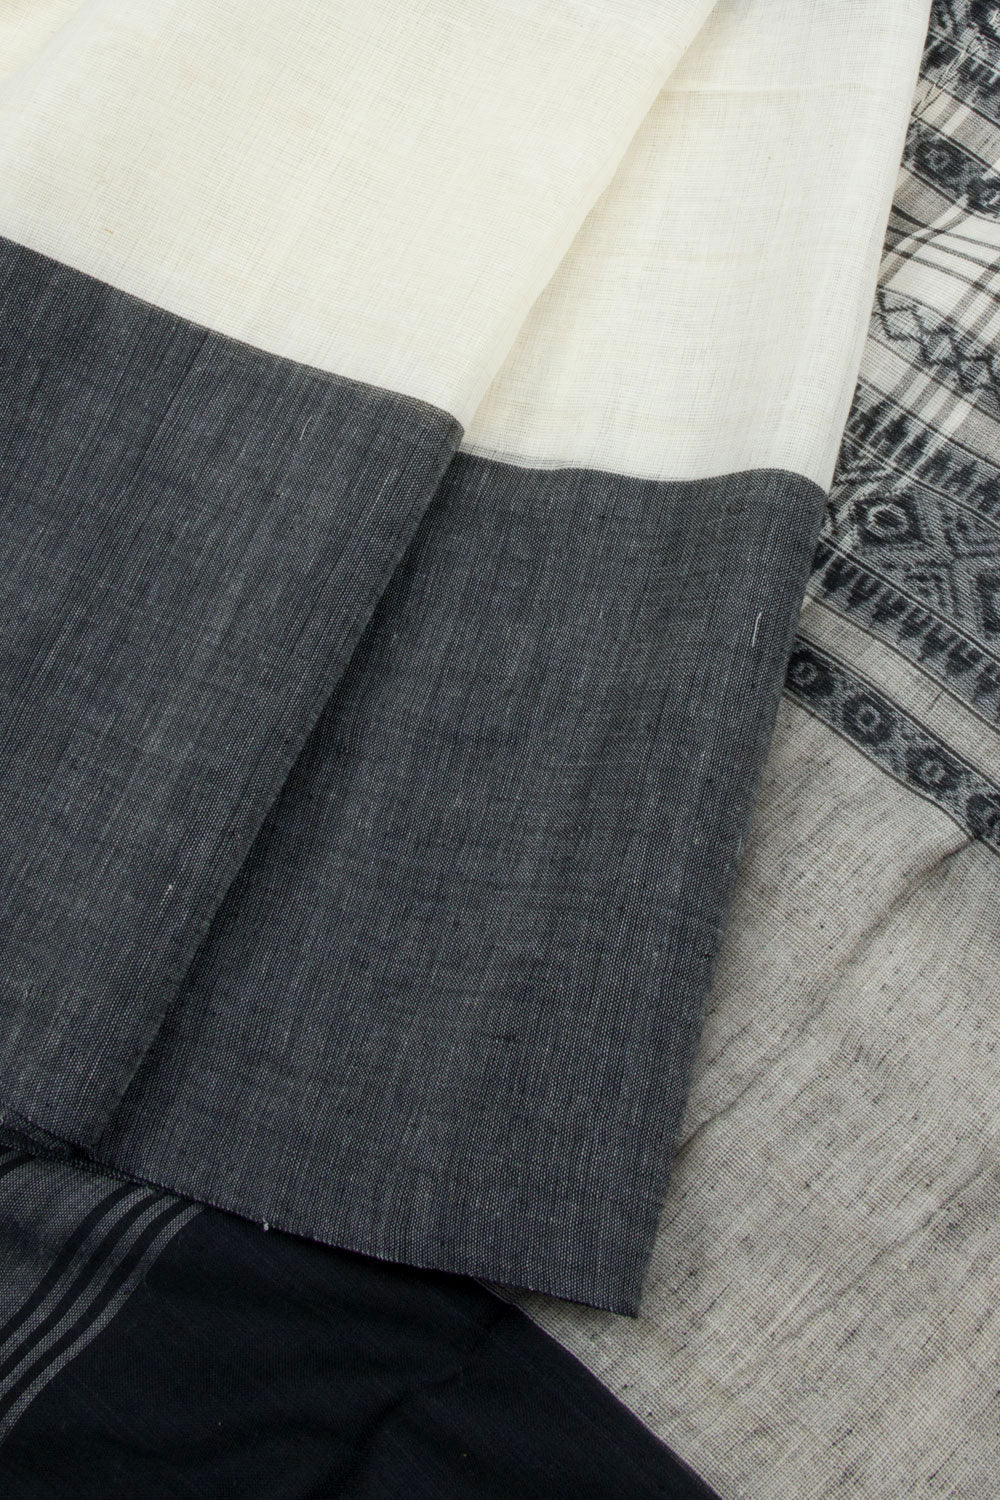 Black & White Handloom Dhaniakhali Cotton Saree 10062592